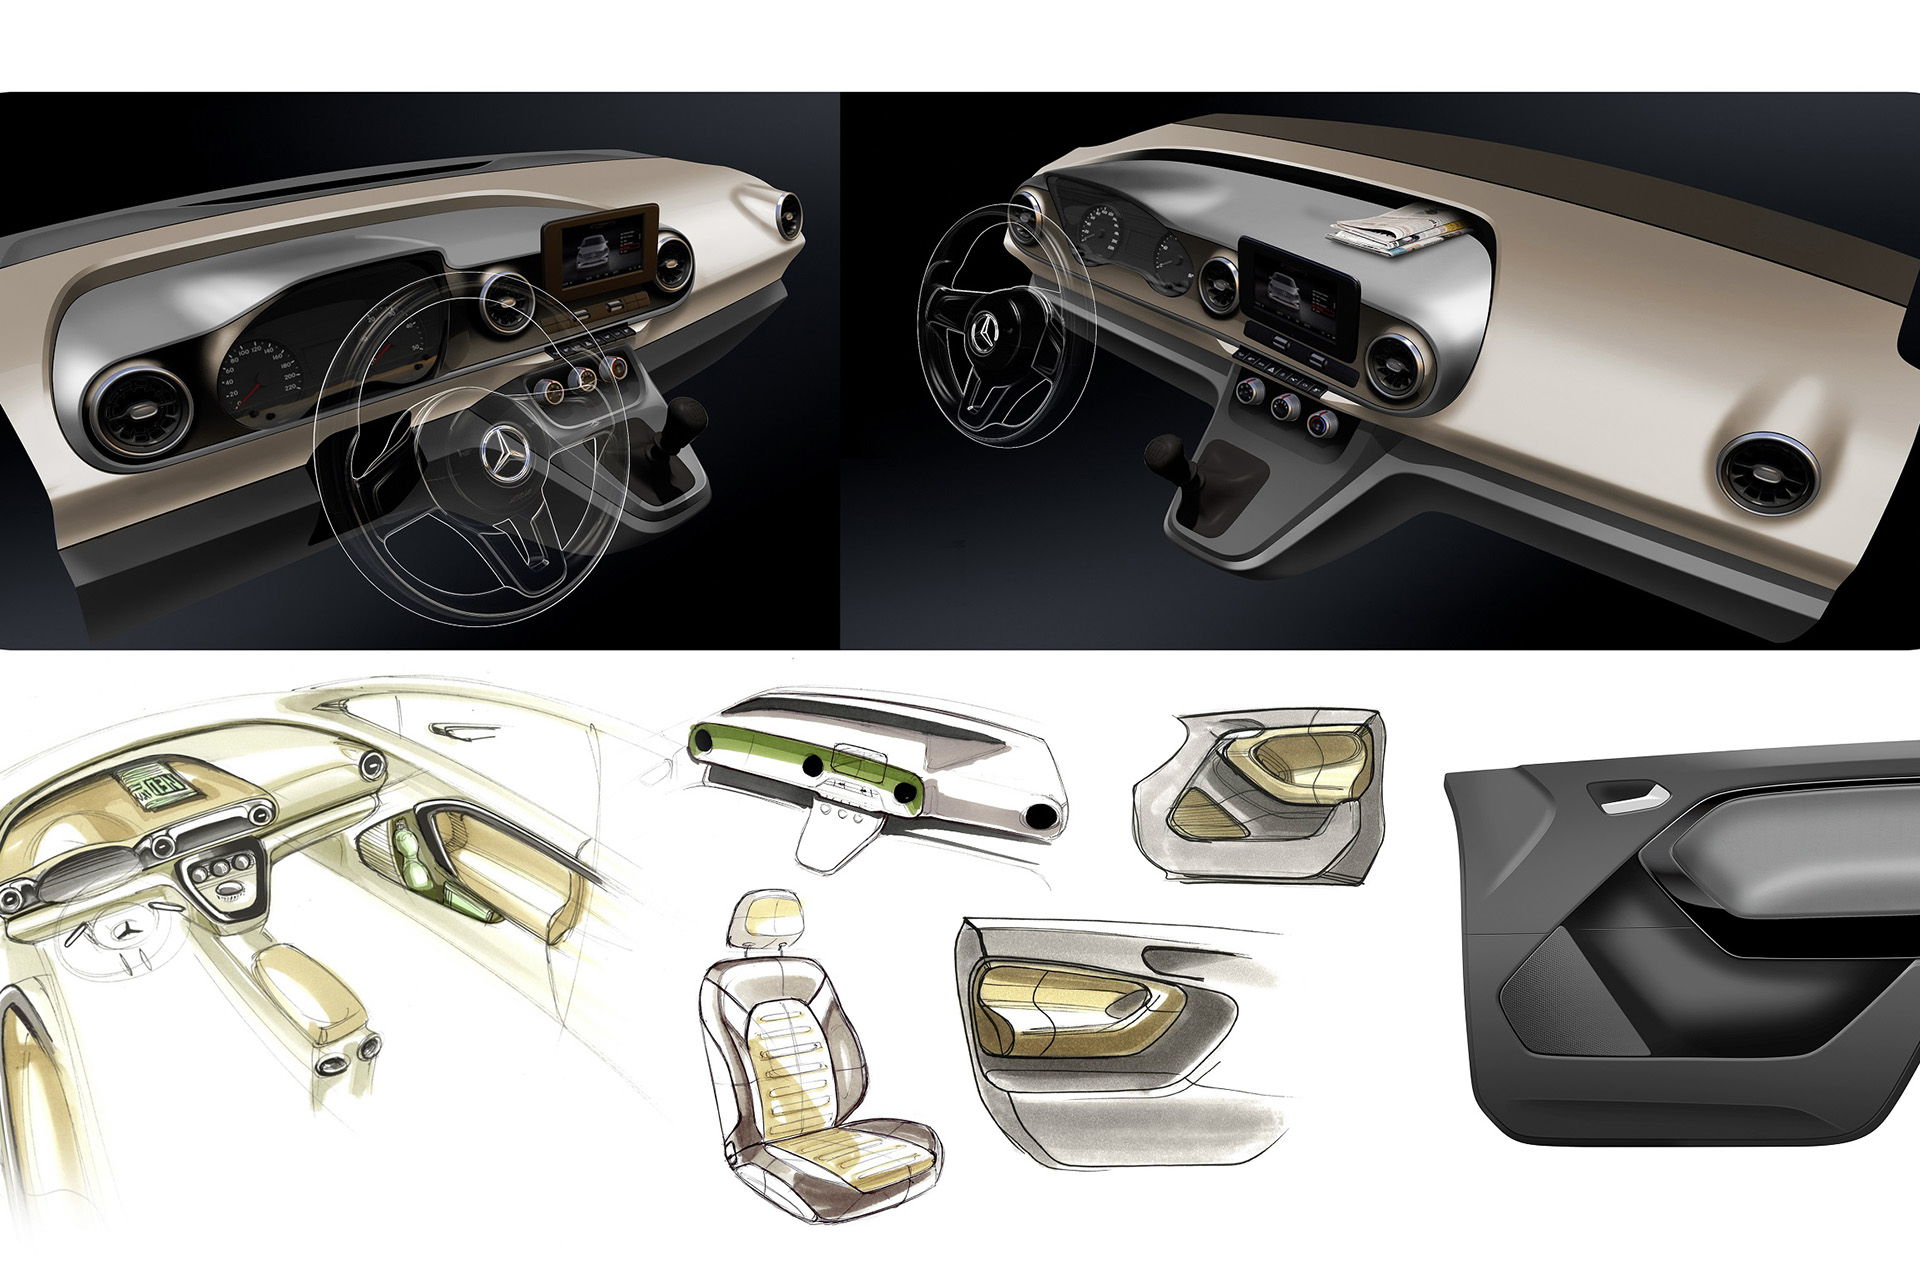 2022 Mercedes-Benz Citan Design Sketch Wallpapers #113 of 115